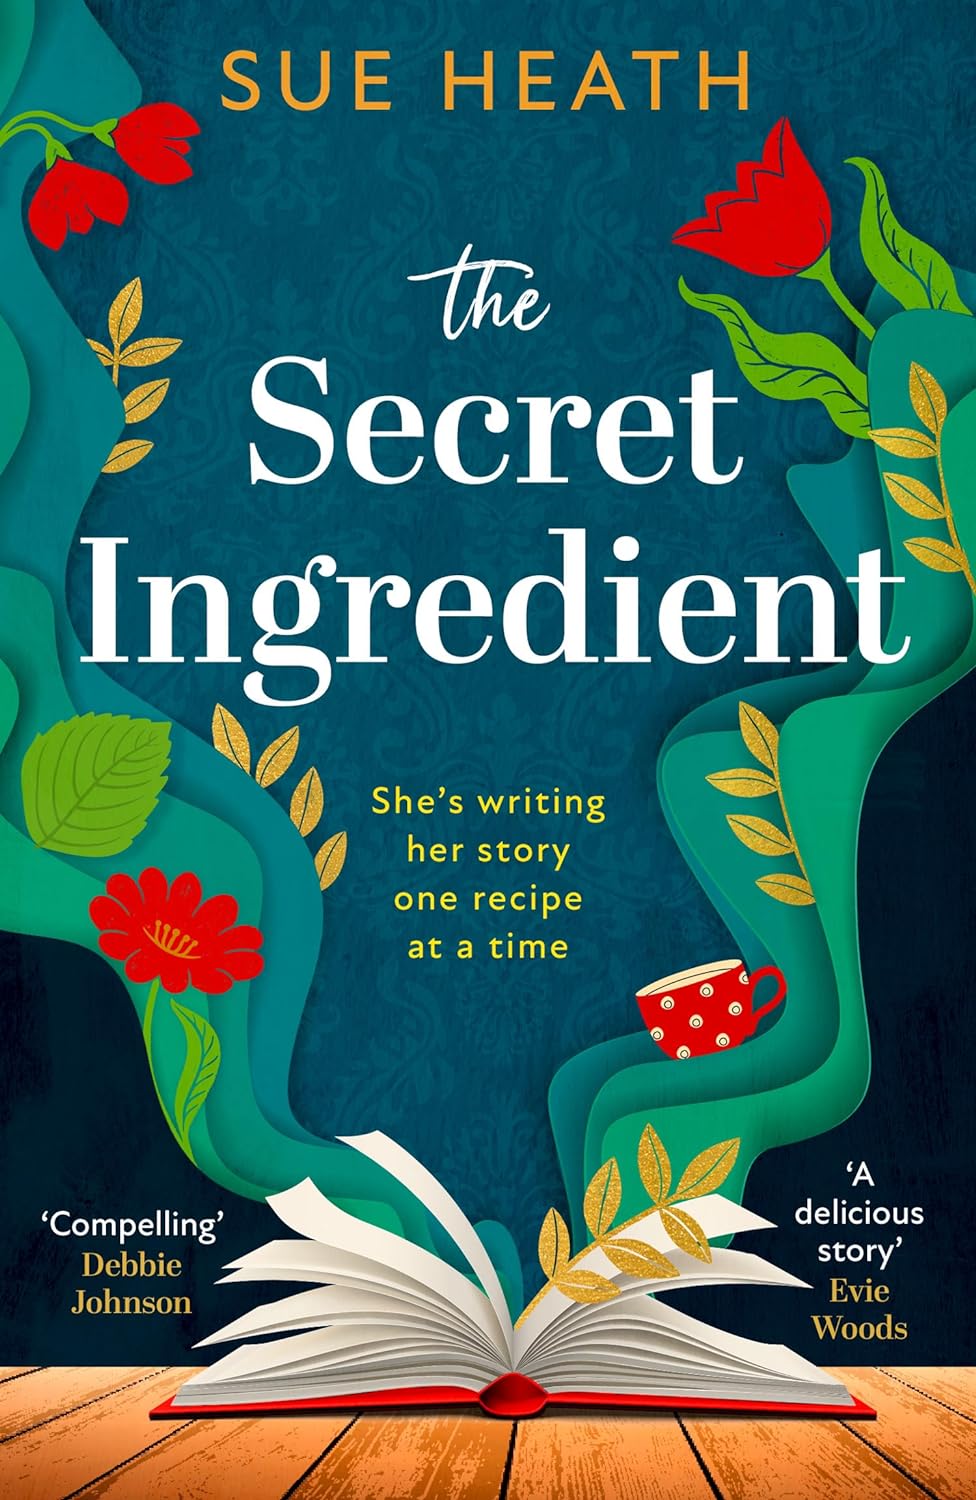 The Secret Ingredient by Sue Heath – cover reveal @ZaraStoneley @rararesources #TheSecretIngredient